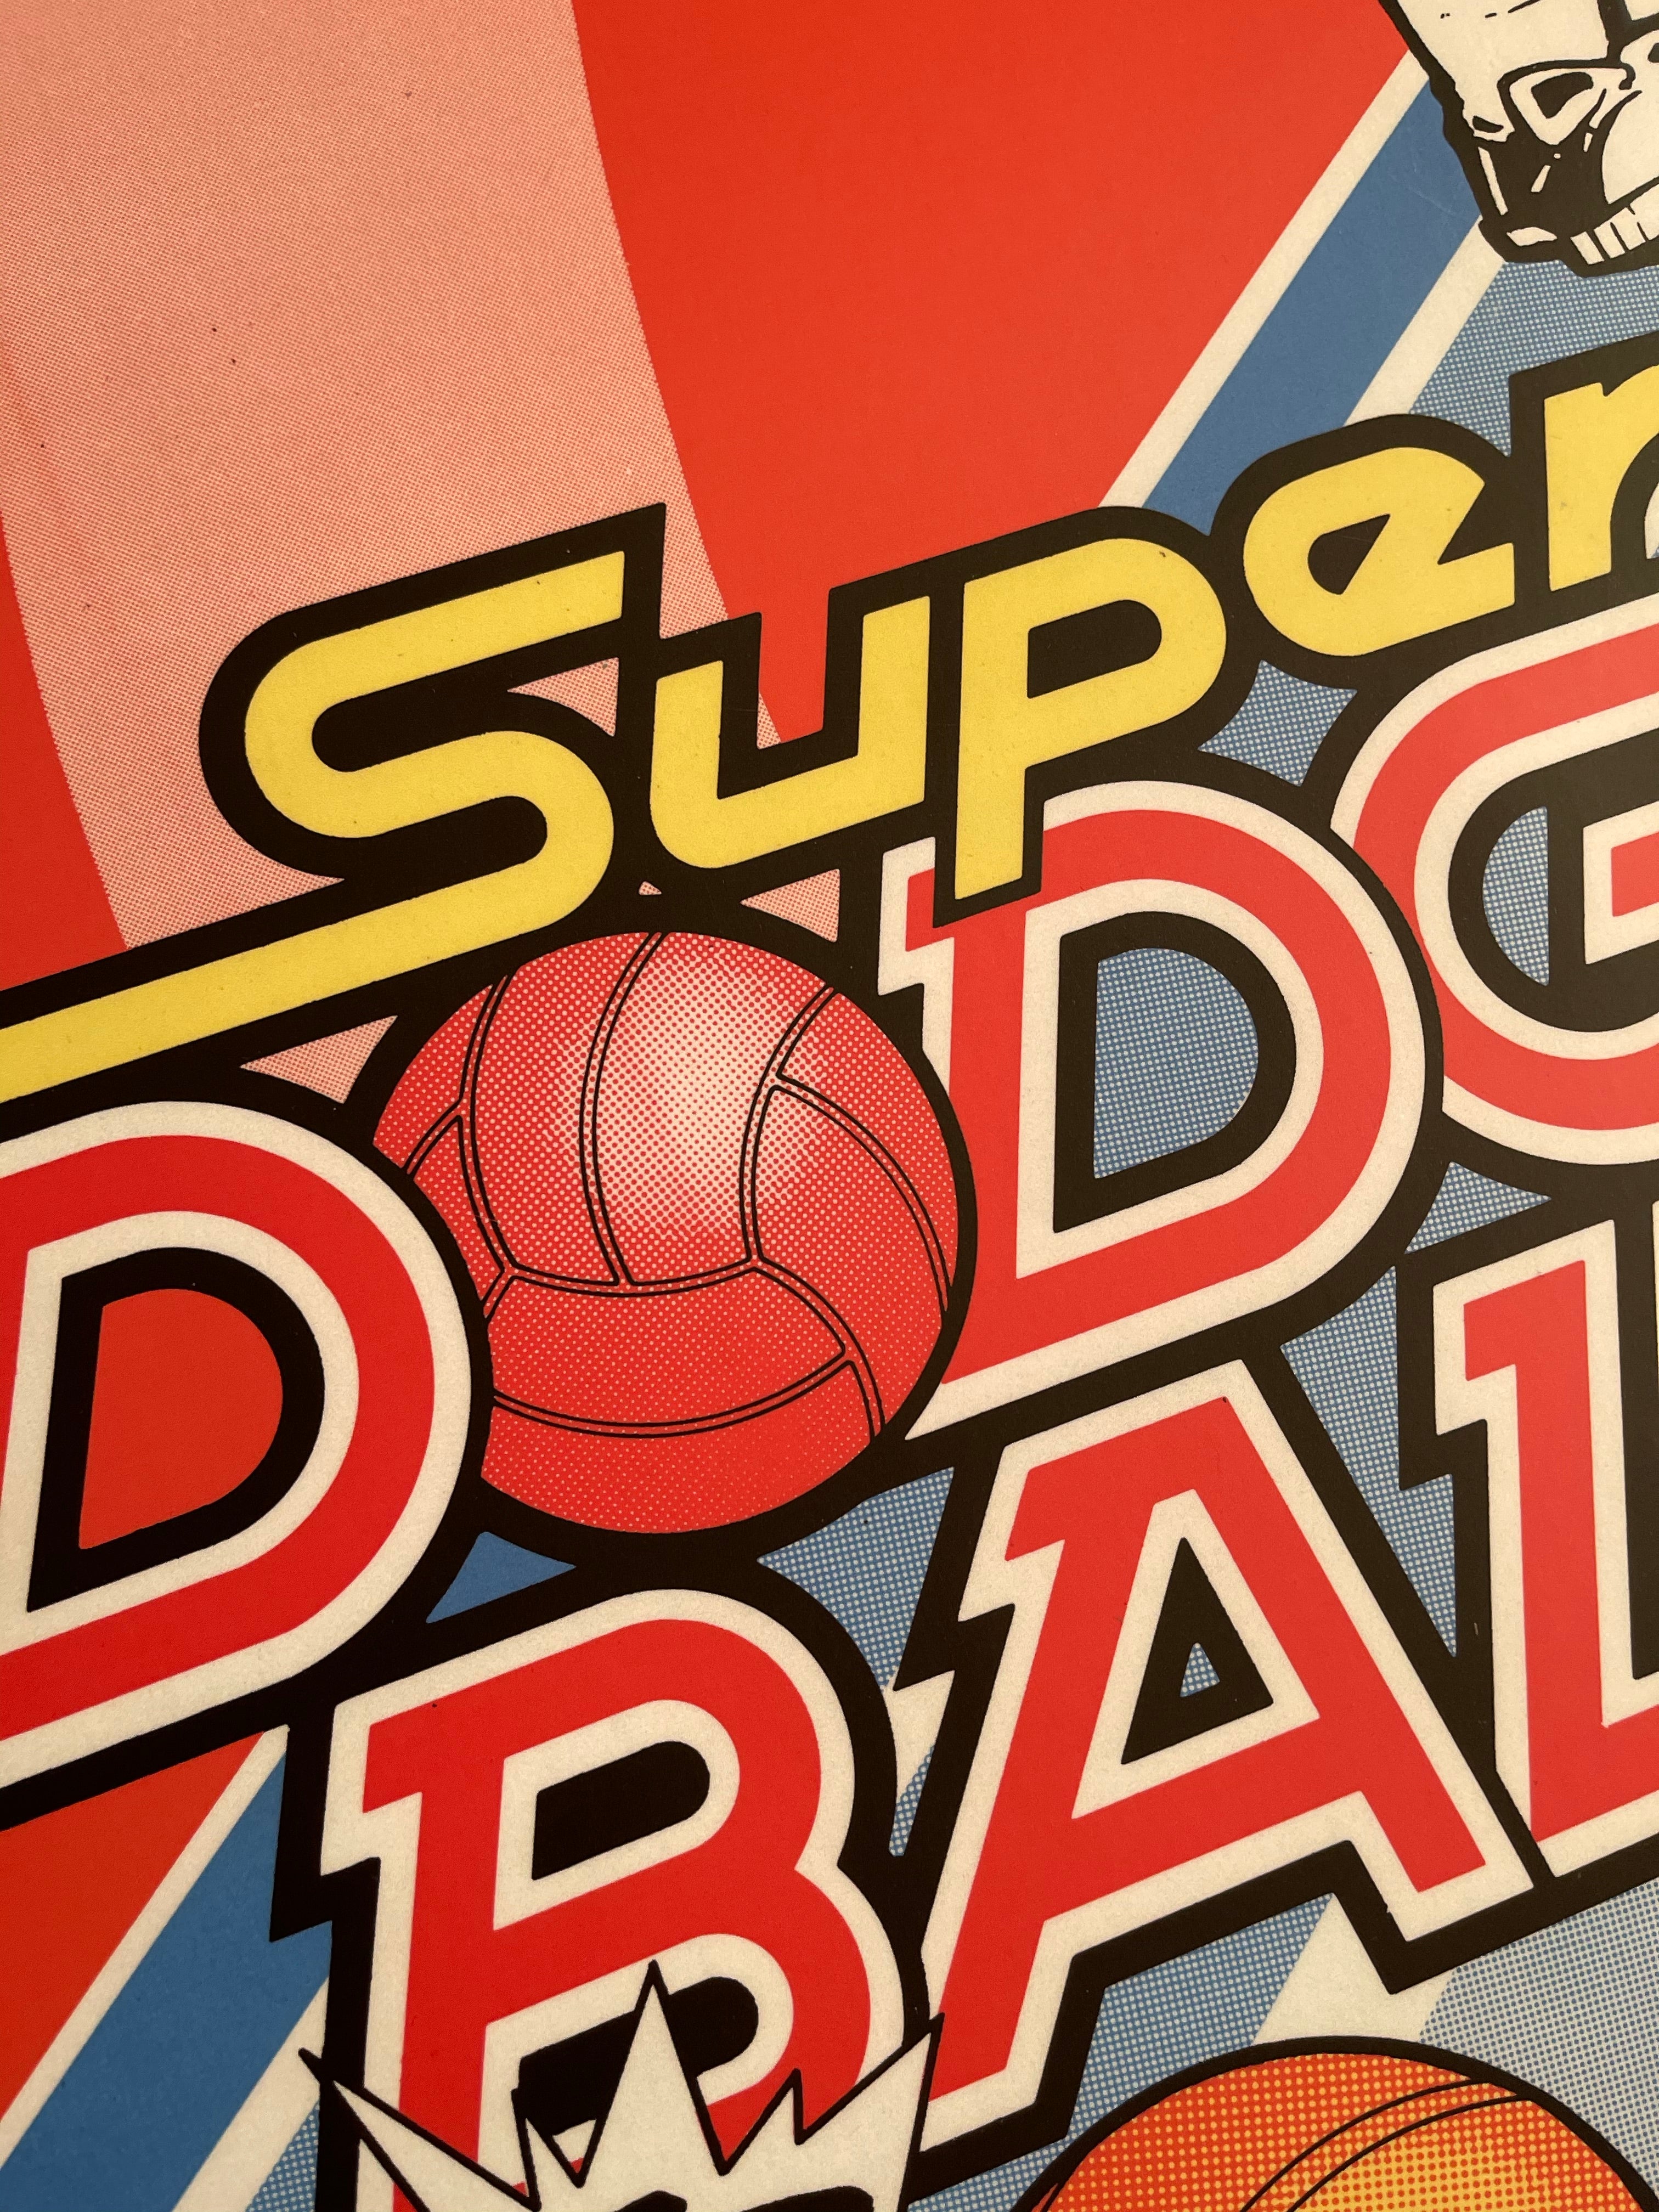 Super Dodge Ball Complete Art Kit